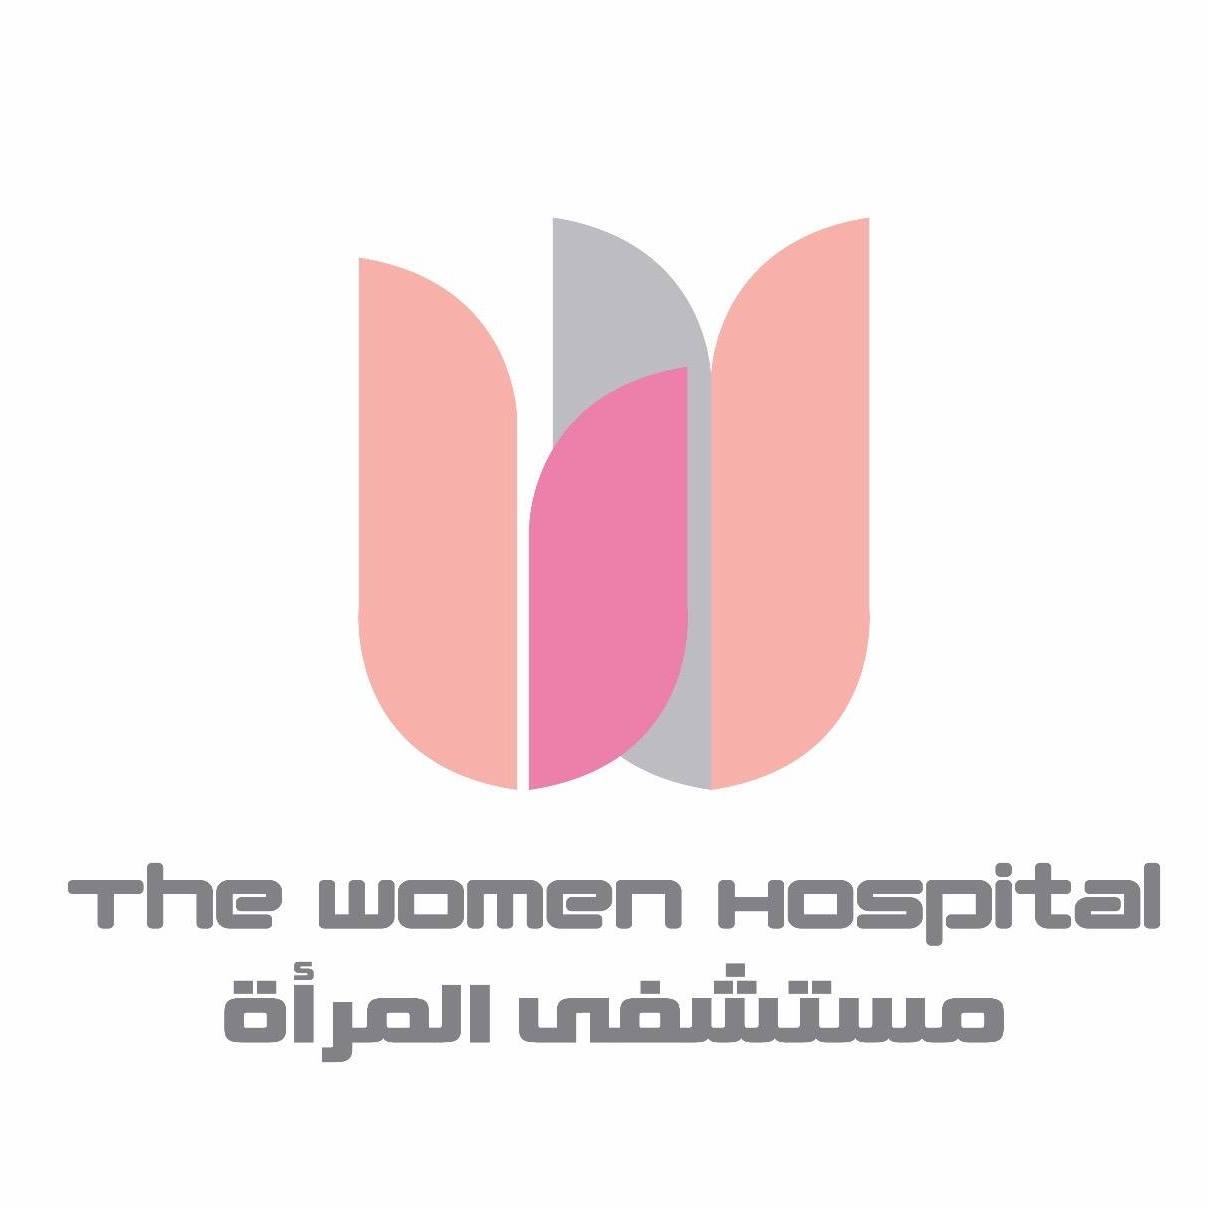 The women hospital